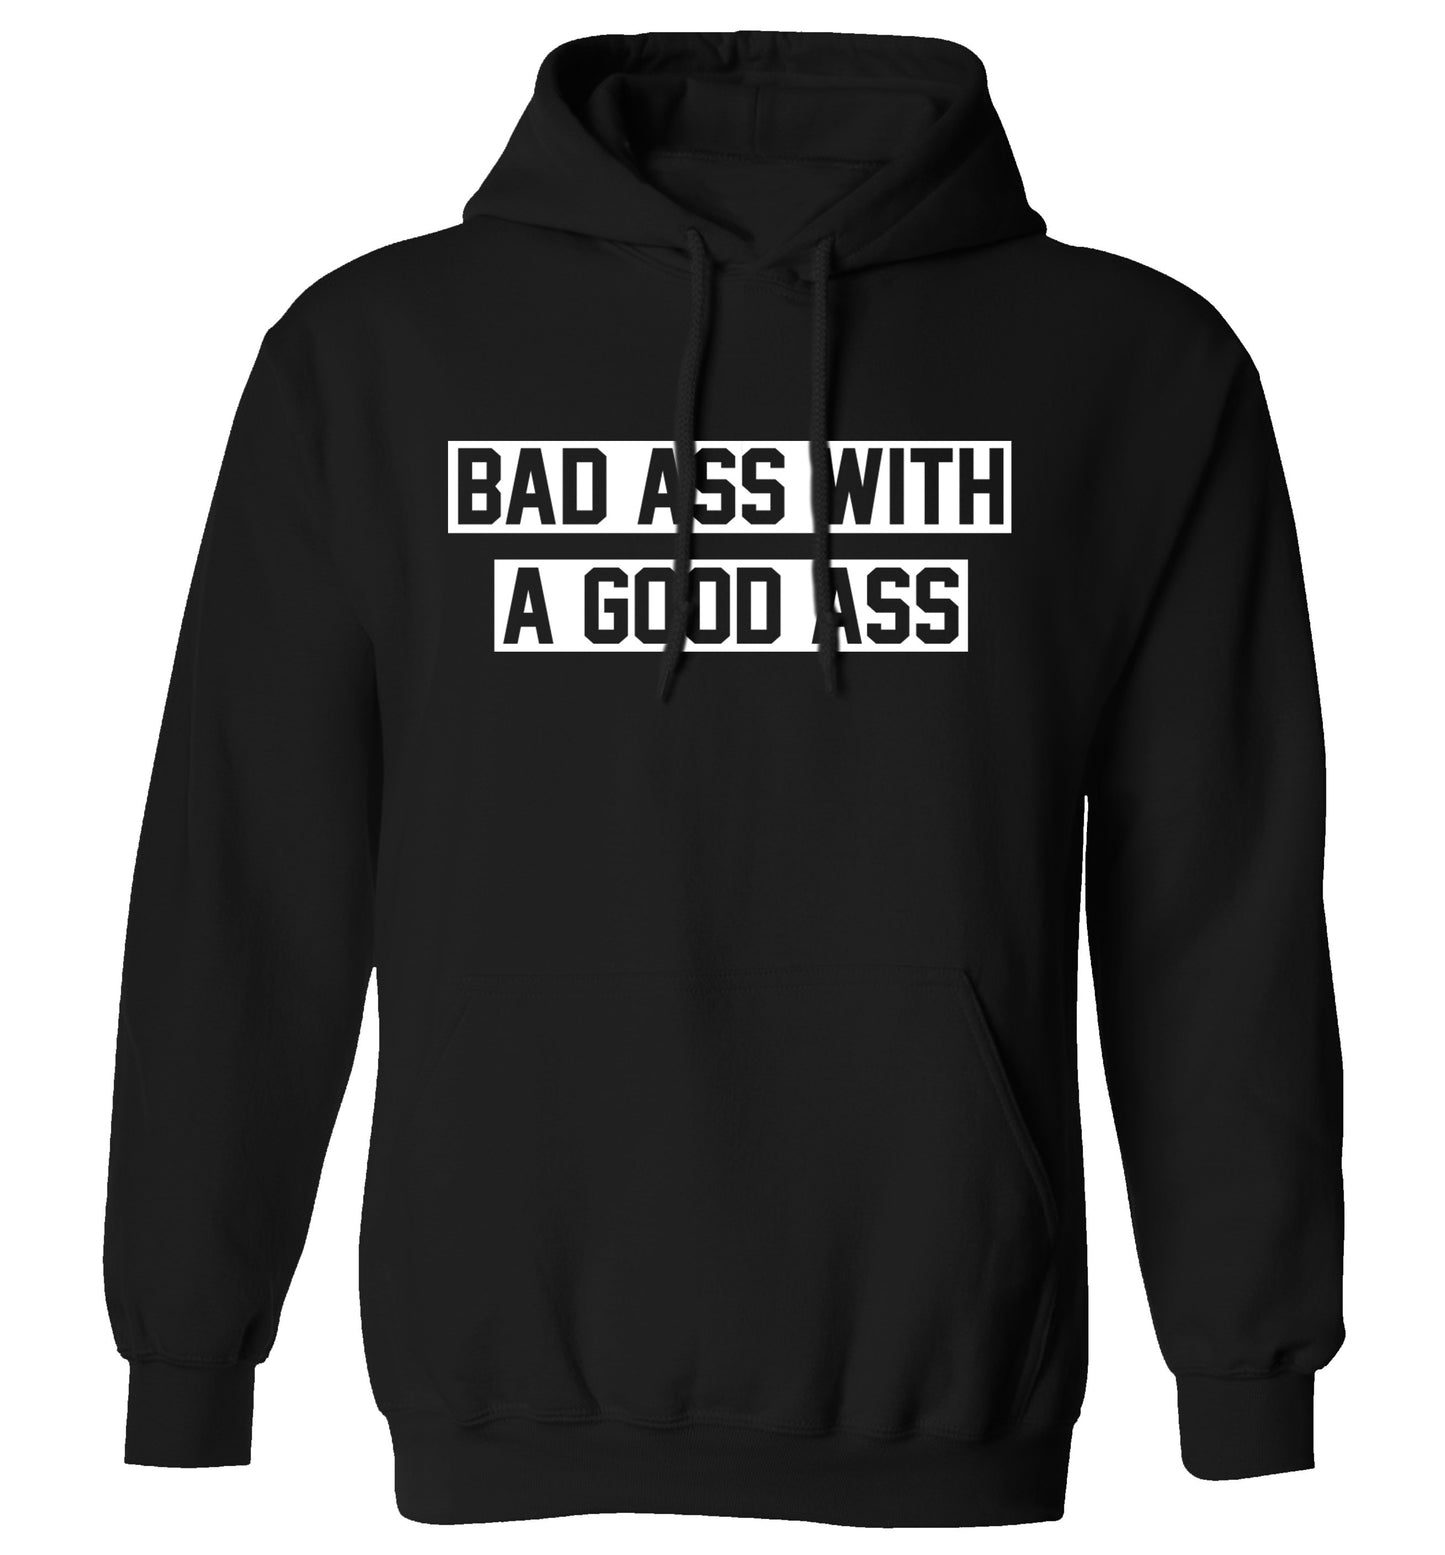 A bad ass with a good ass adults unisex black hoodie 2XL